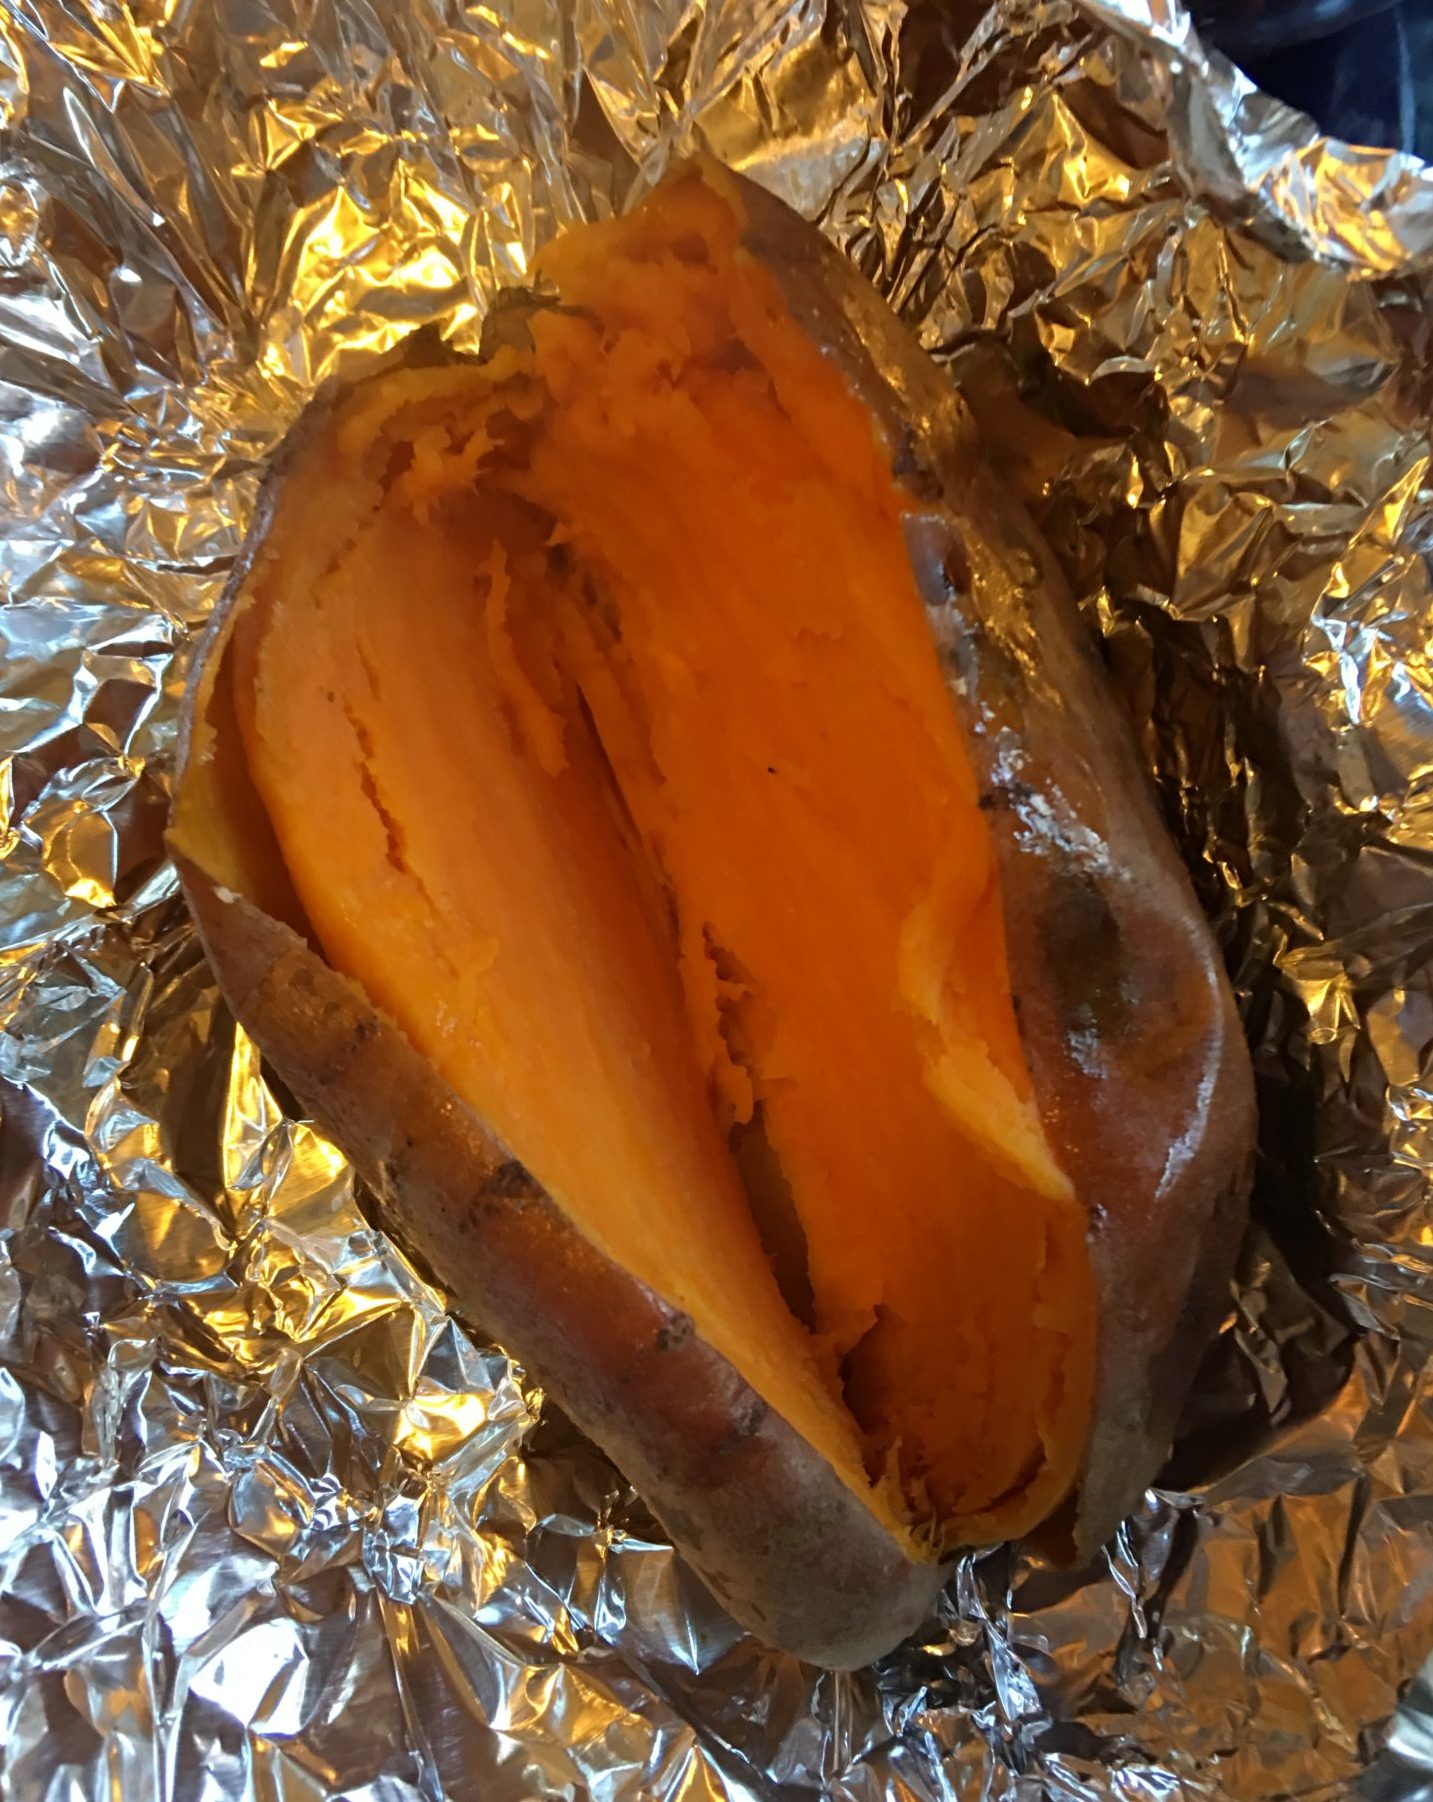 Baked Sweet Potato